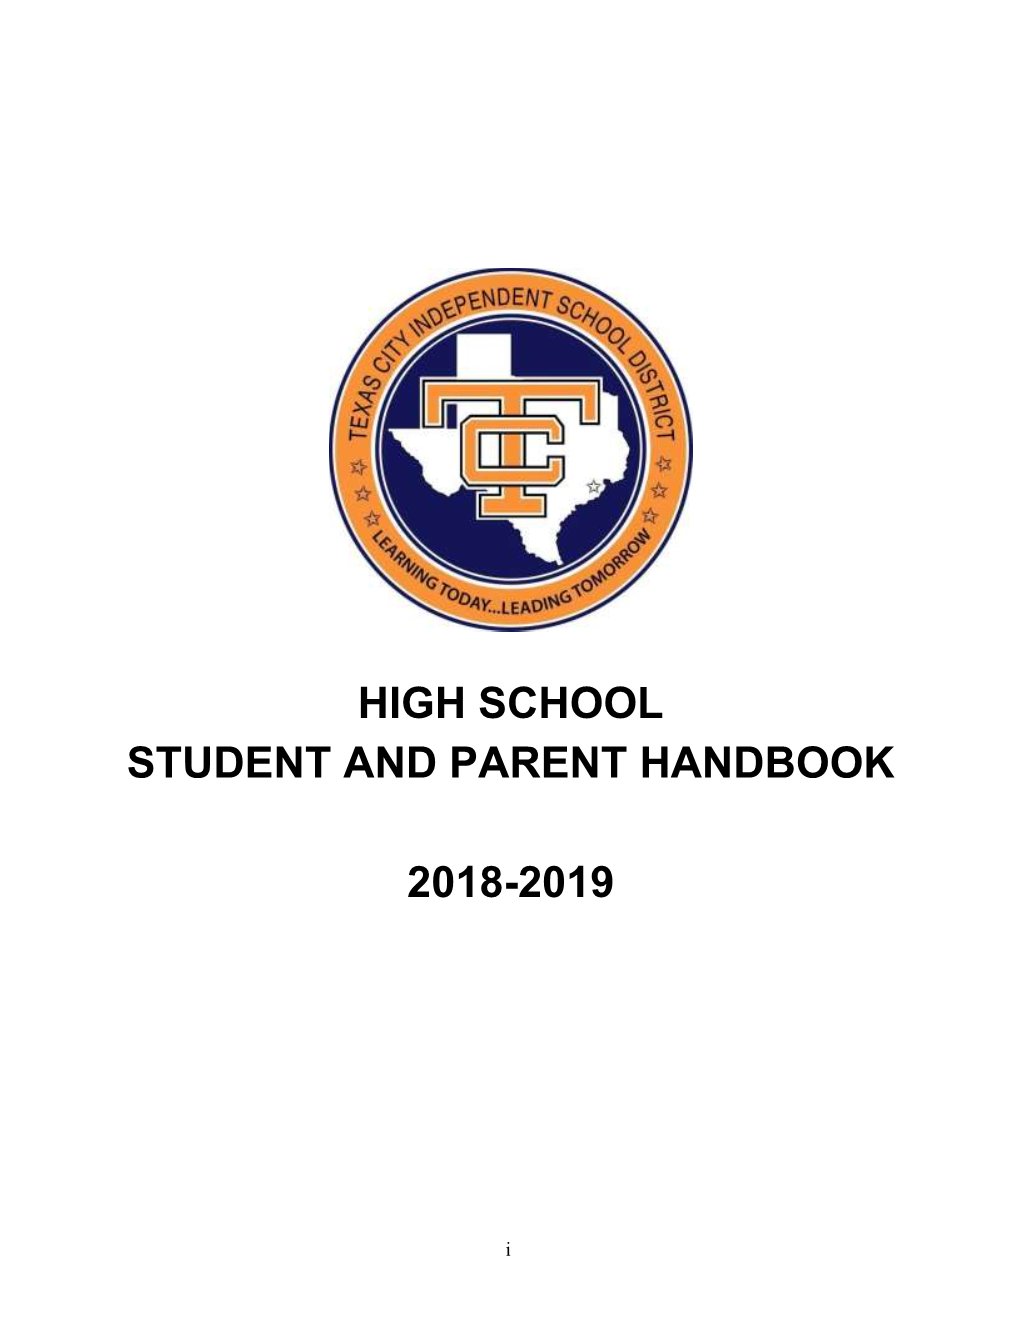 High School Student and Parent Handbook 2018-2019